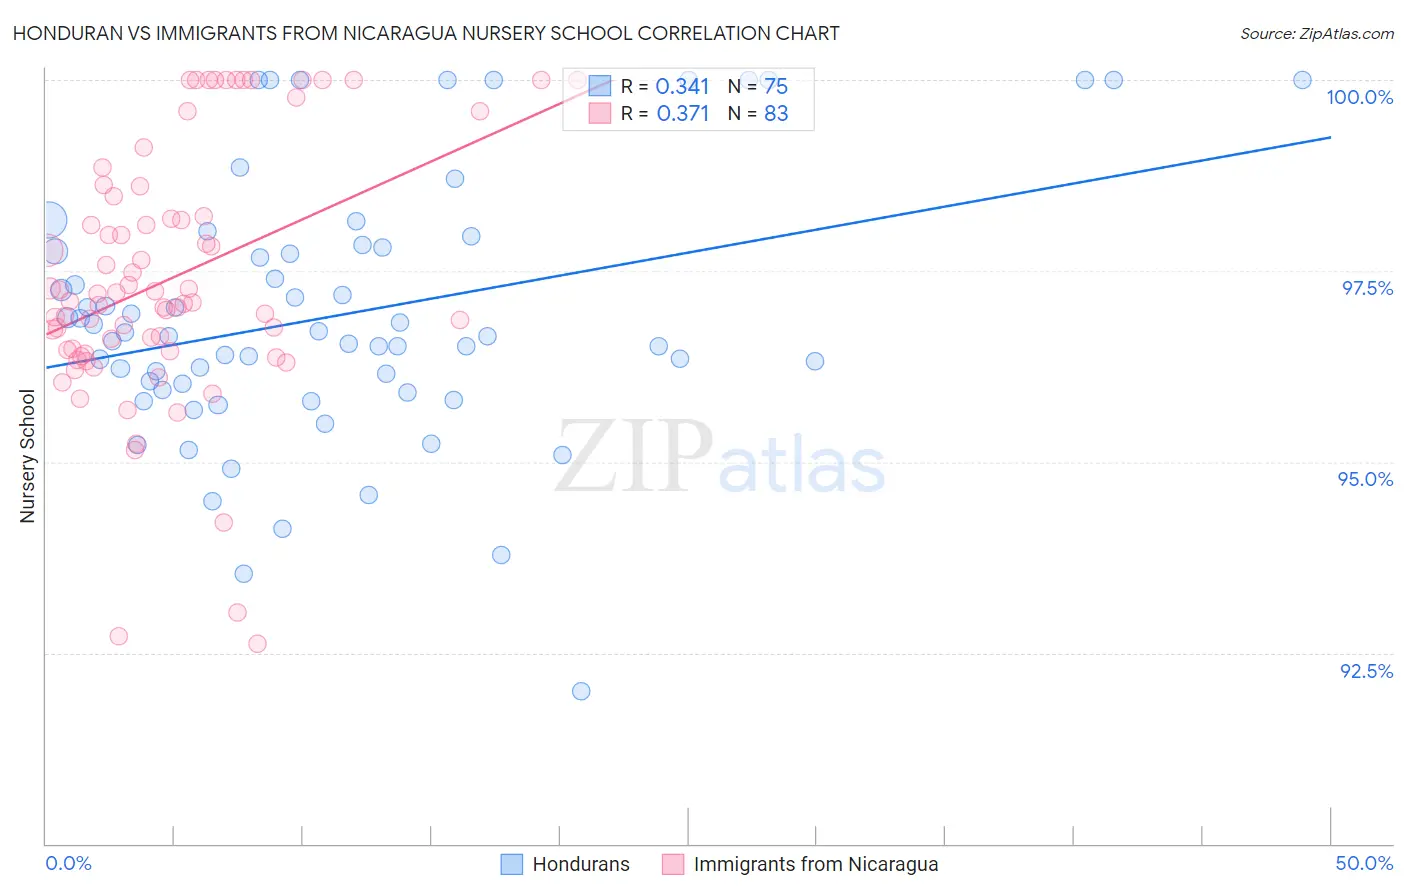 Honduran vs Immigrants from Nicaragua Nursery School